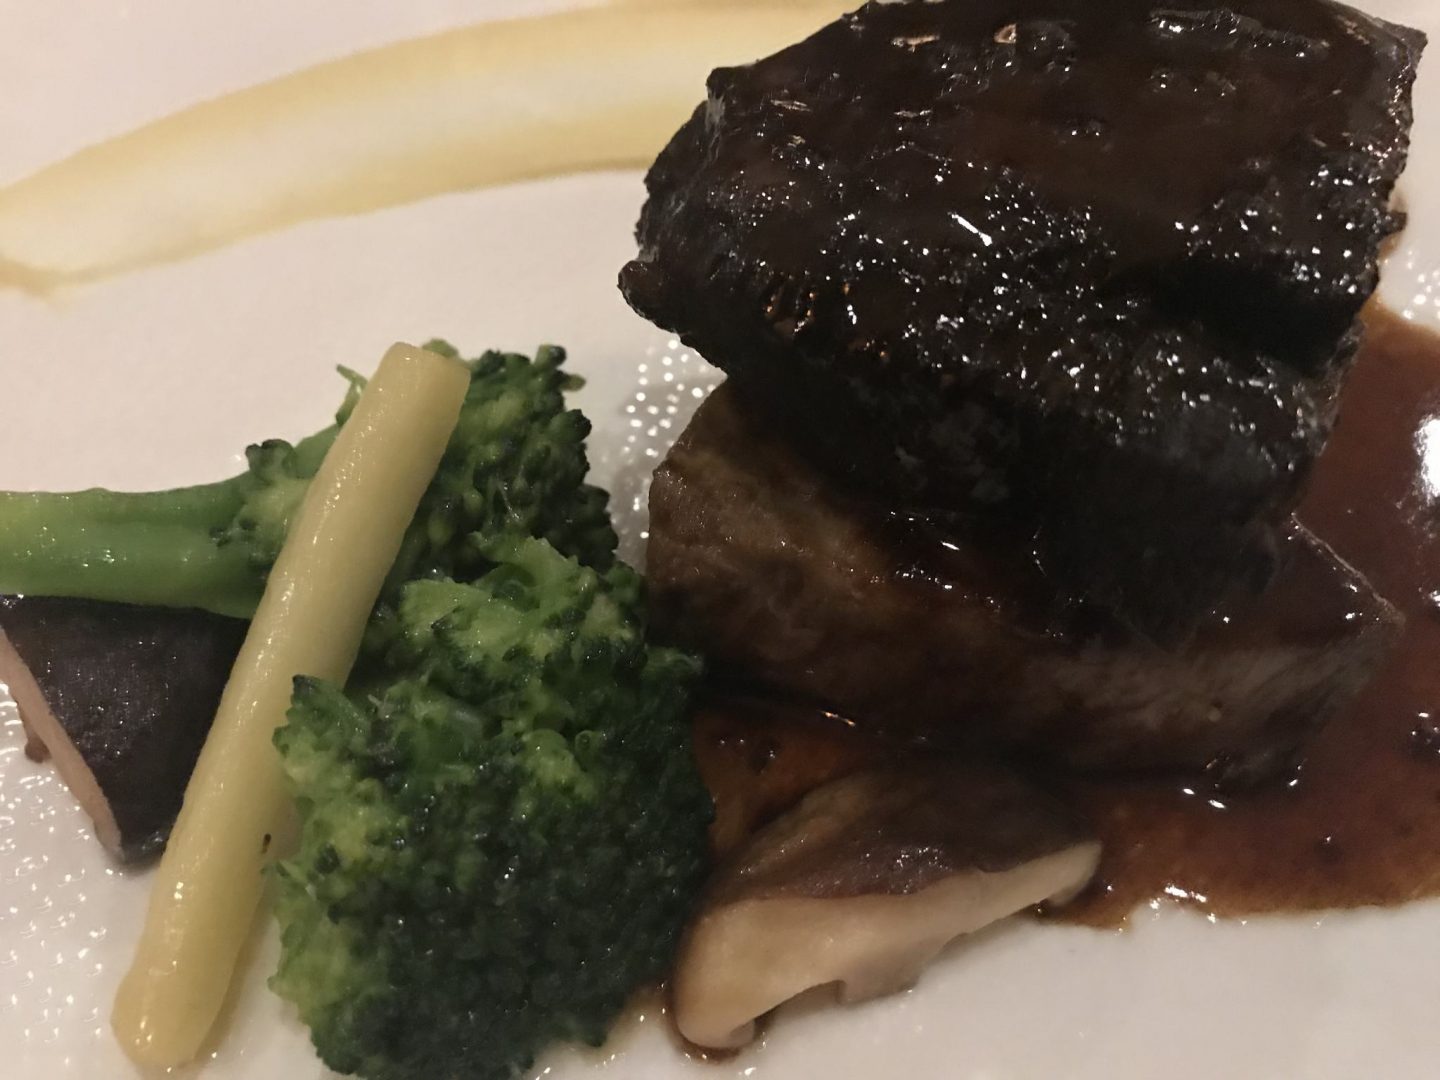 Rinderbacke Rind rosa gebraten Erfahrung Menükarussell Gute Stube Parkhotel Herne Foodblog Sternestulle